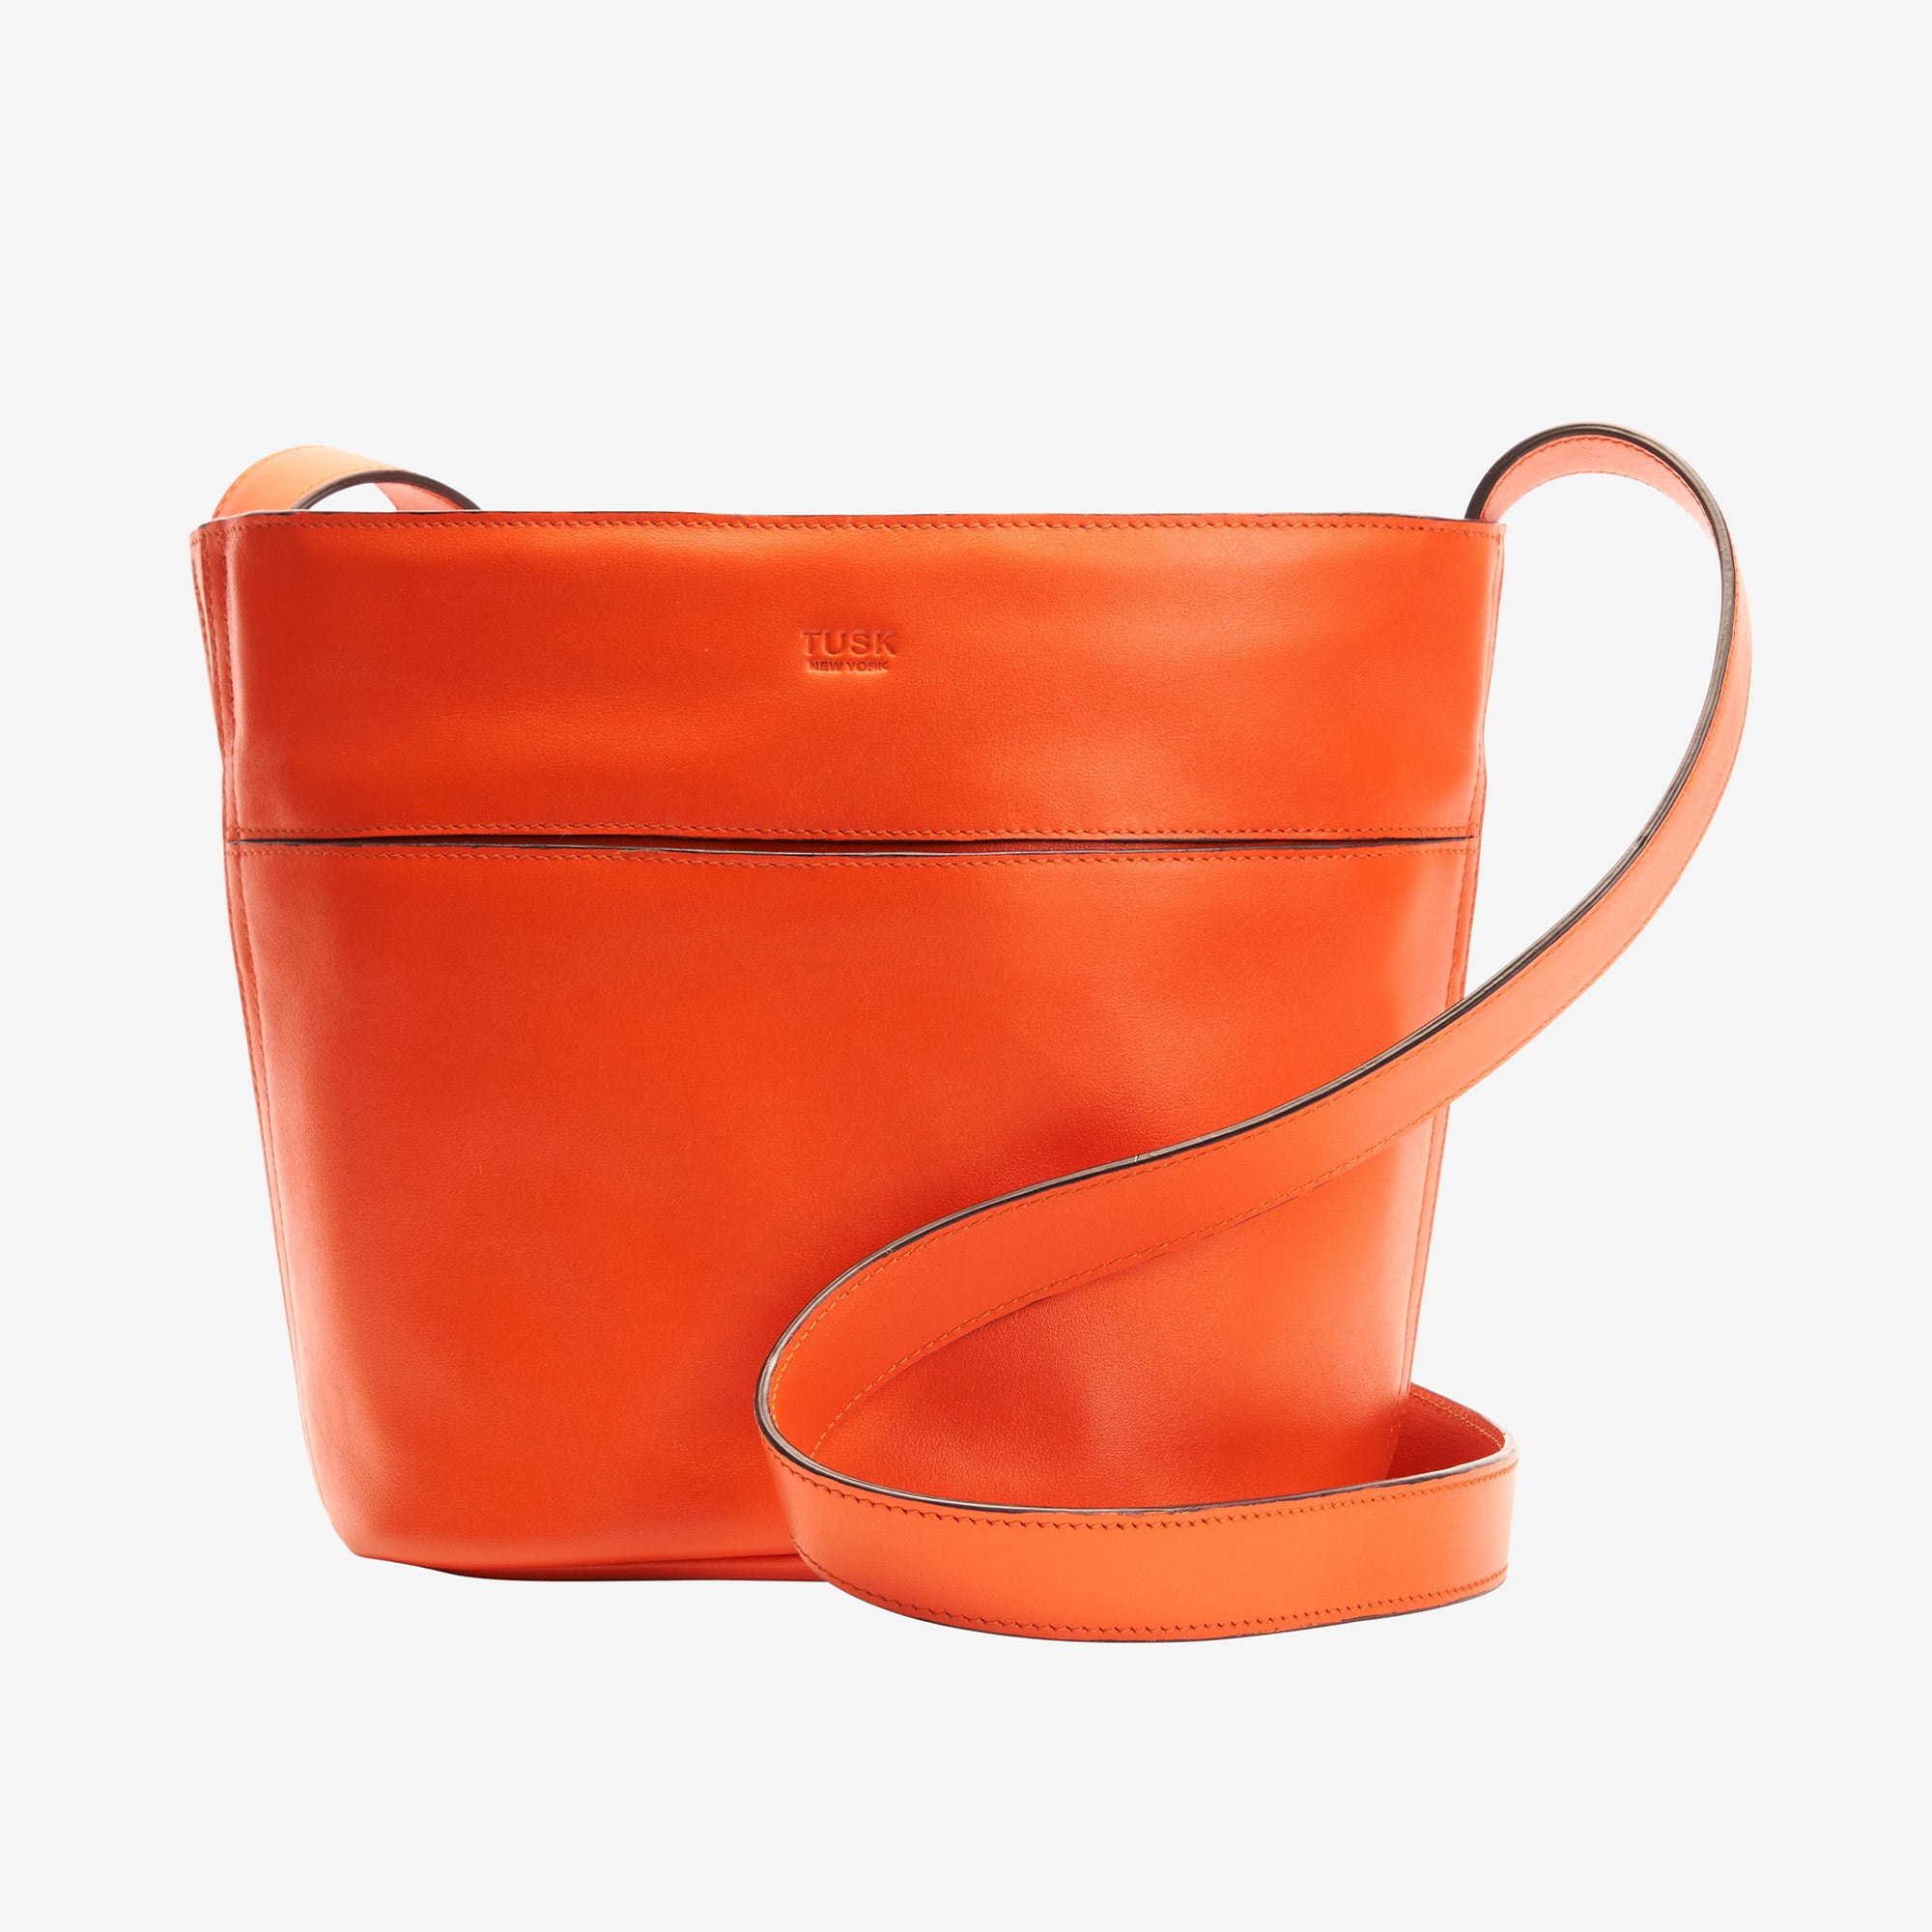 tusk-9925-leather-charu-small-bucket-bag-orange-front